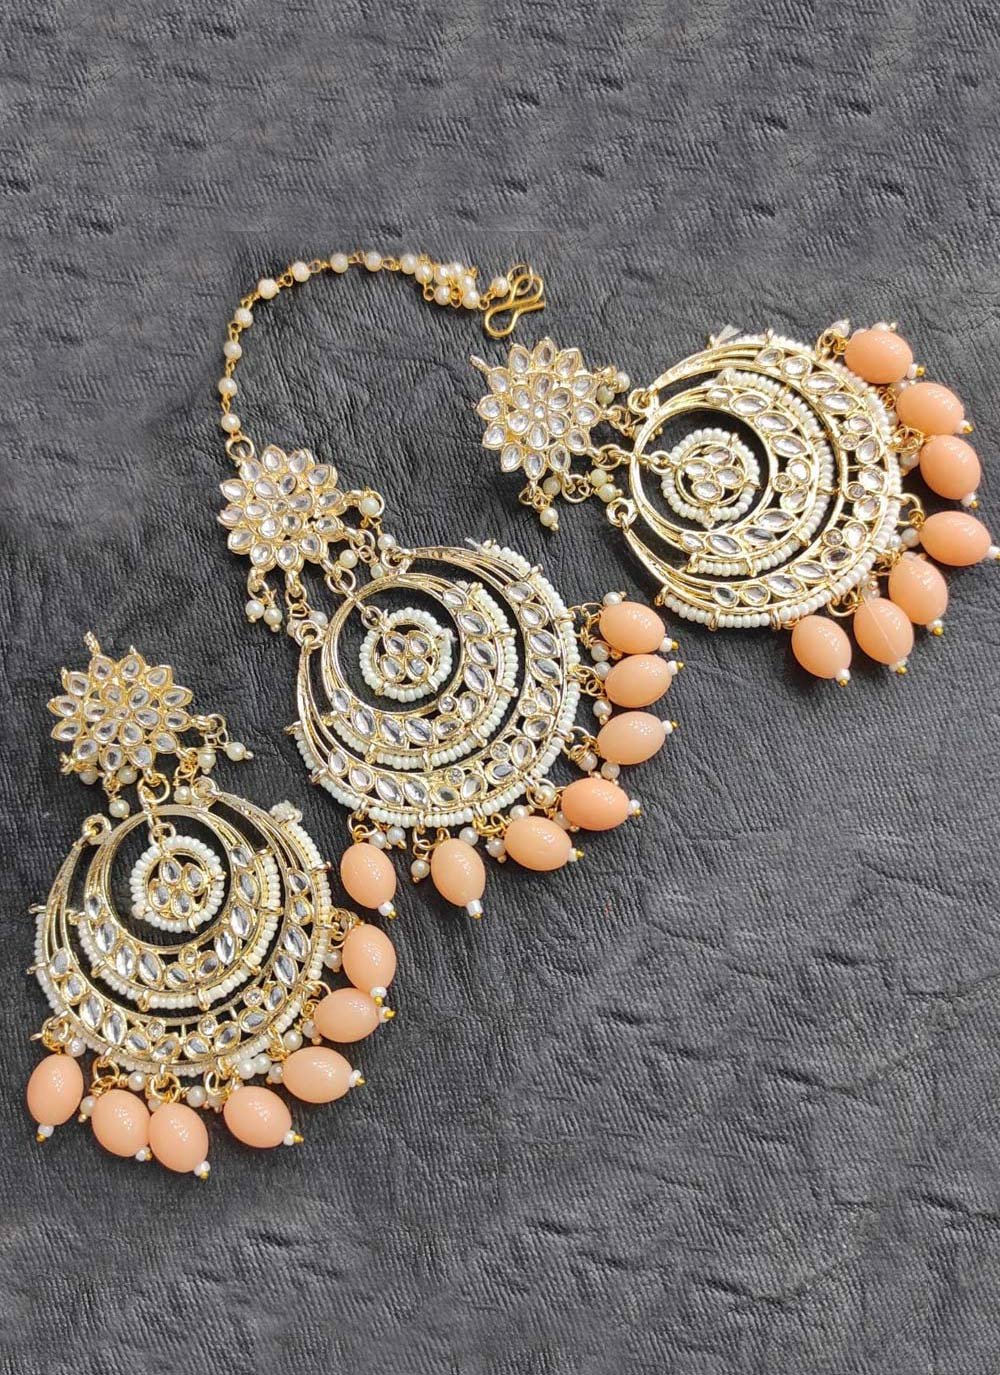 Lovely Beads Work Gold Rodium Polish Earrings Set